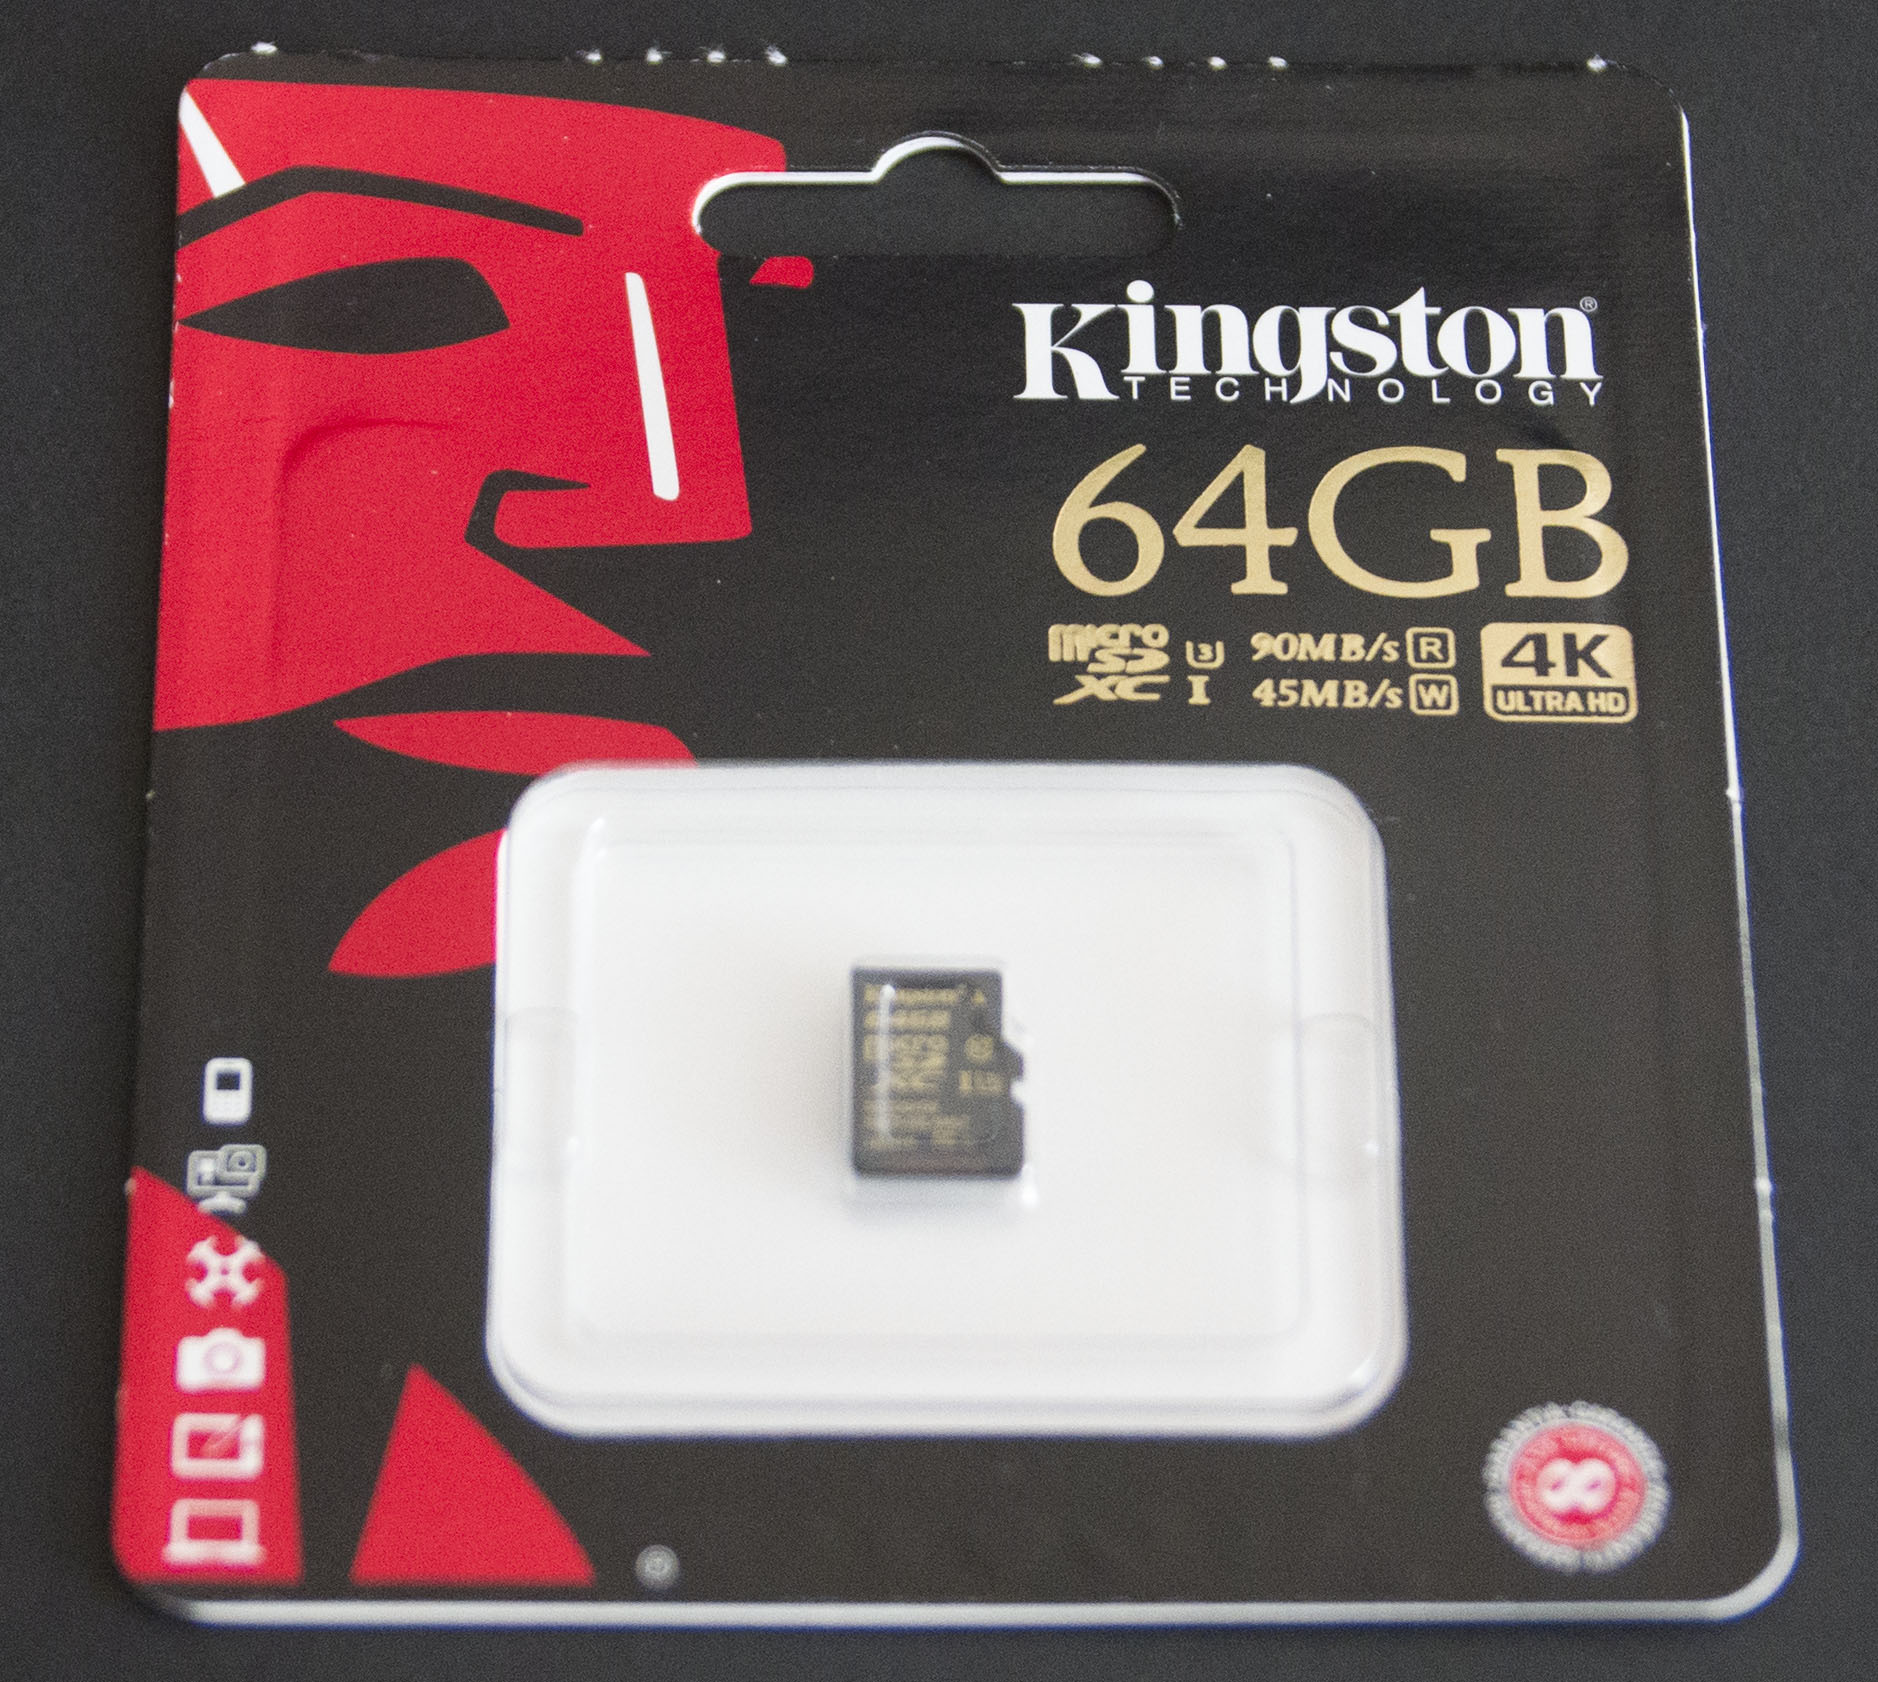 Kingston Gold Series UHS-1 Speed Class 3 64GB MicroSDXC Card Review Kingston, SDXC, Stroage 1